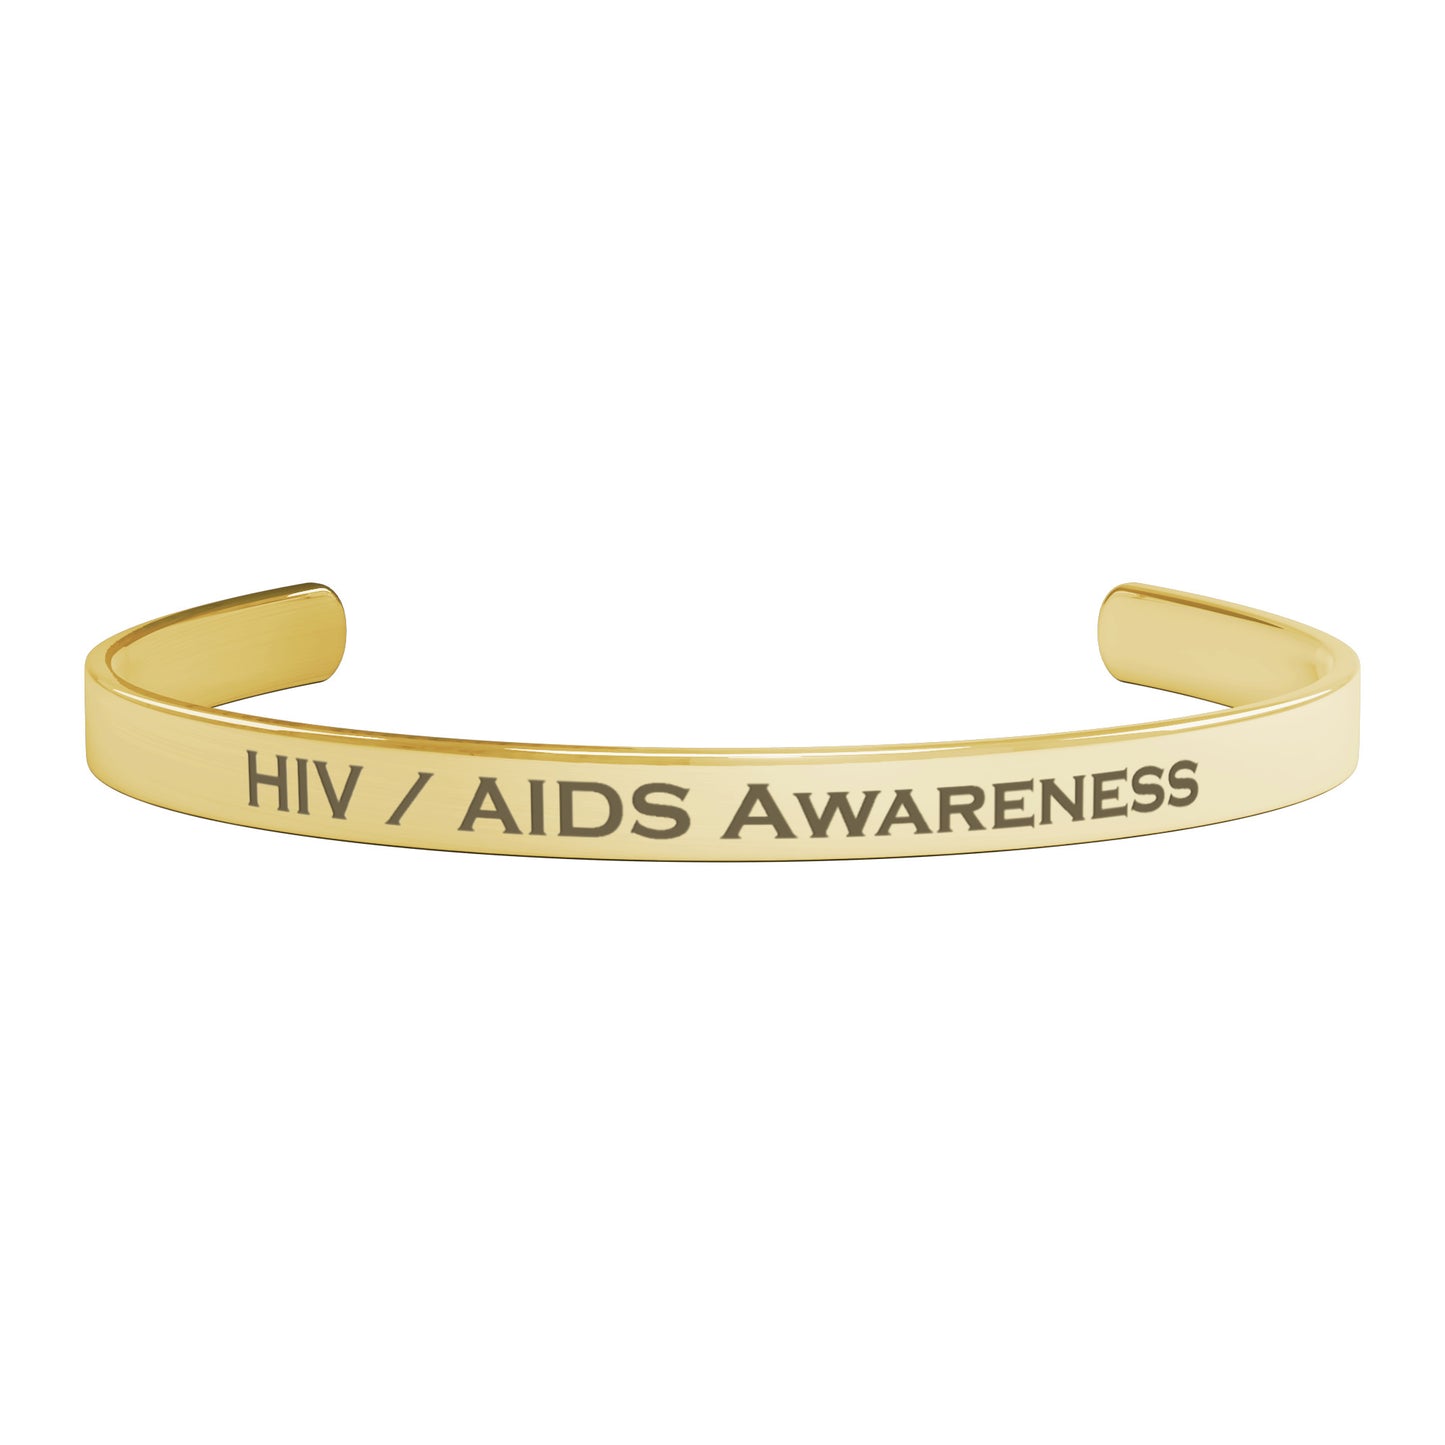 Personalized HIV / AIDS Awareness Cuff Bracelet